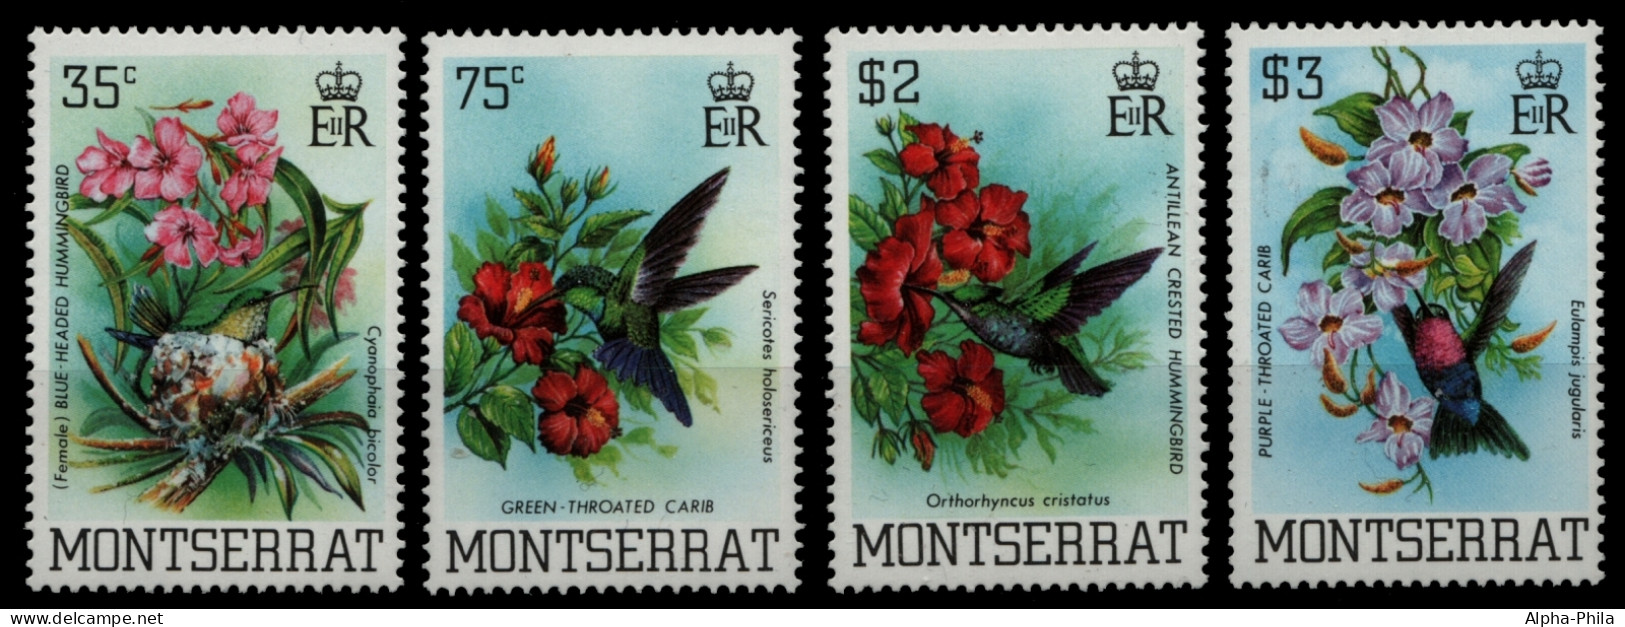 Montserrat 1983 - Mi-Nr. 507-510 ** - MNH - Vögel / Birds - Kolibris - Montserrat